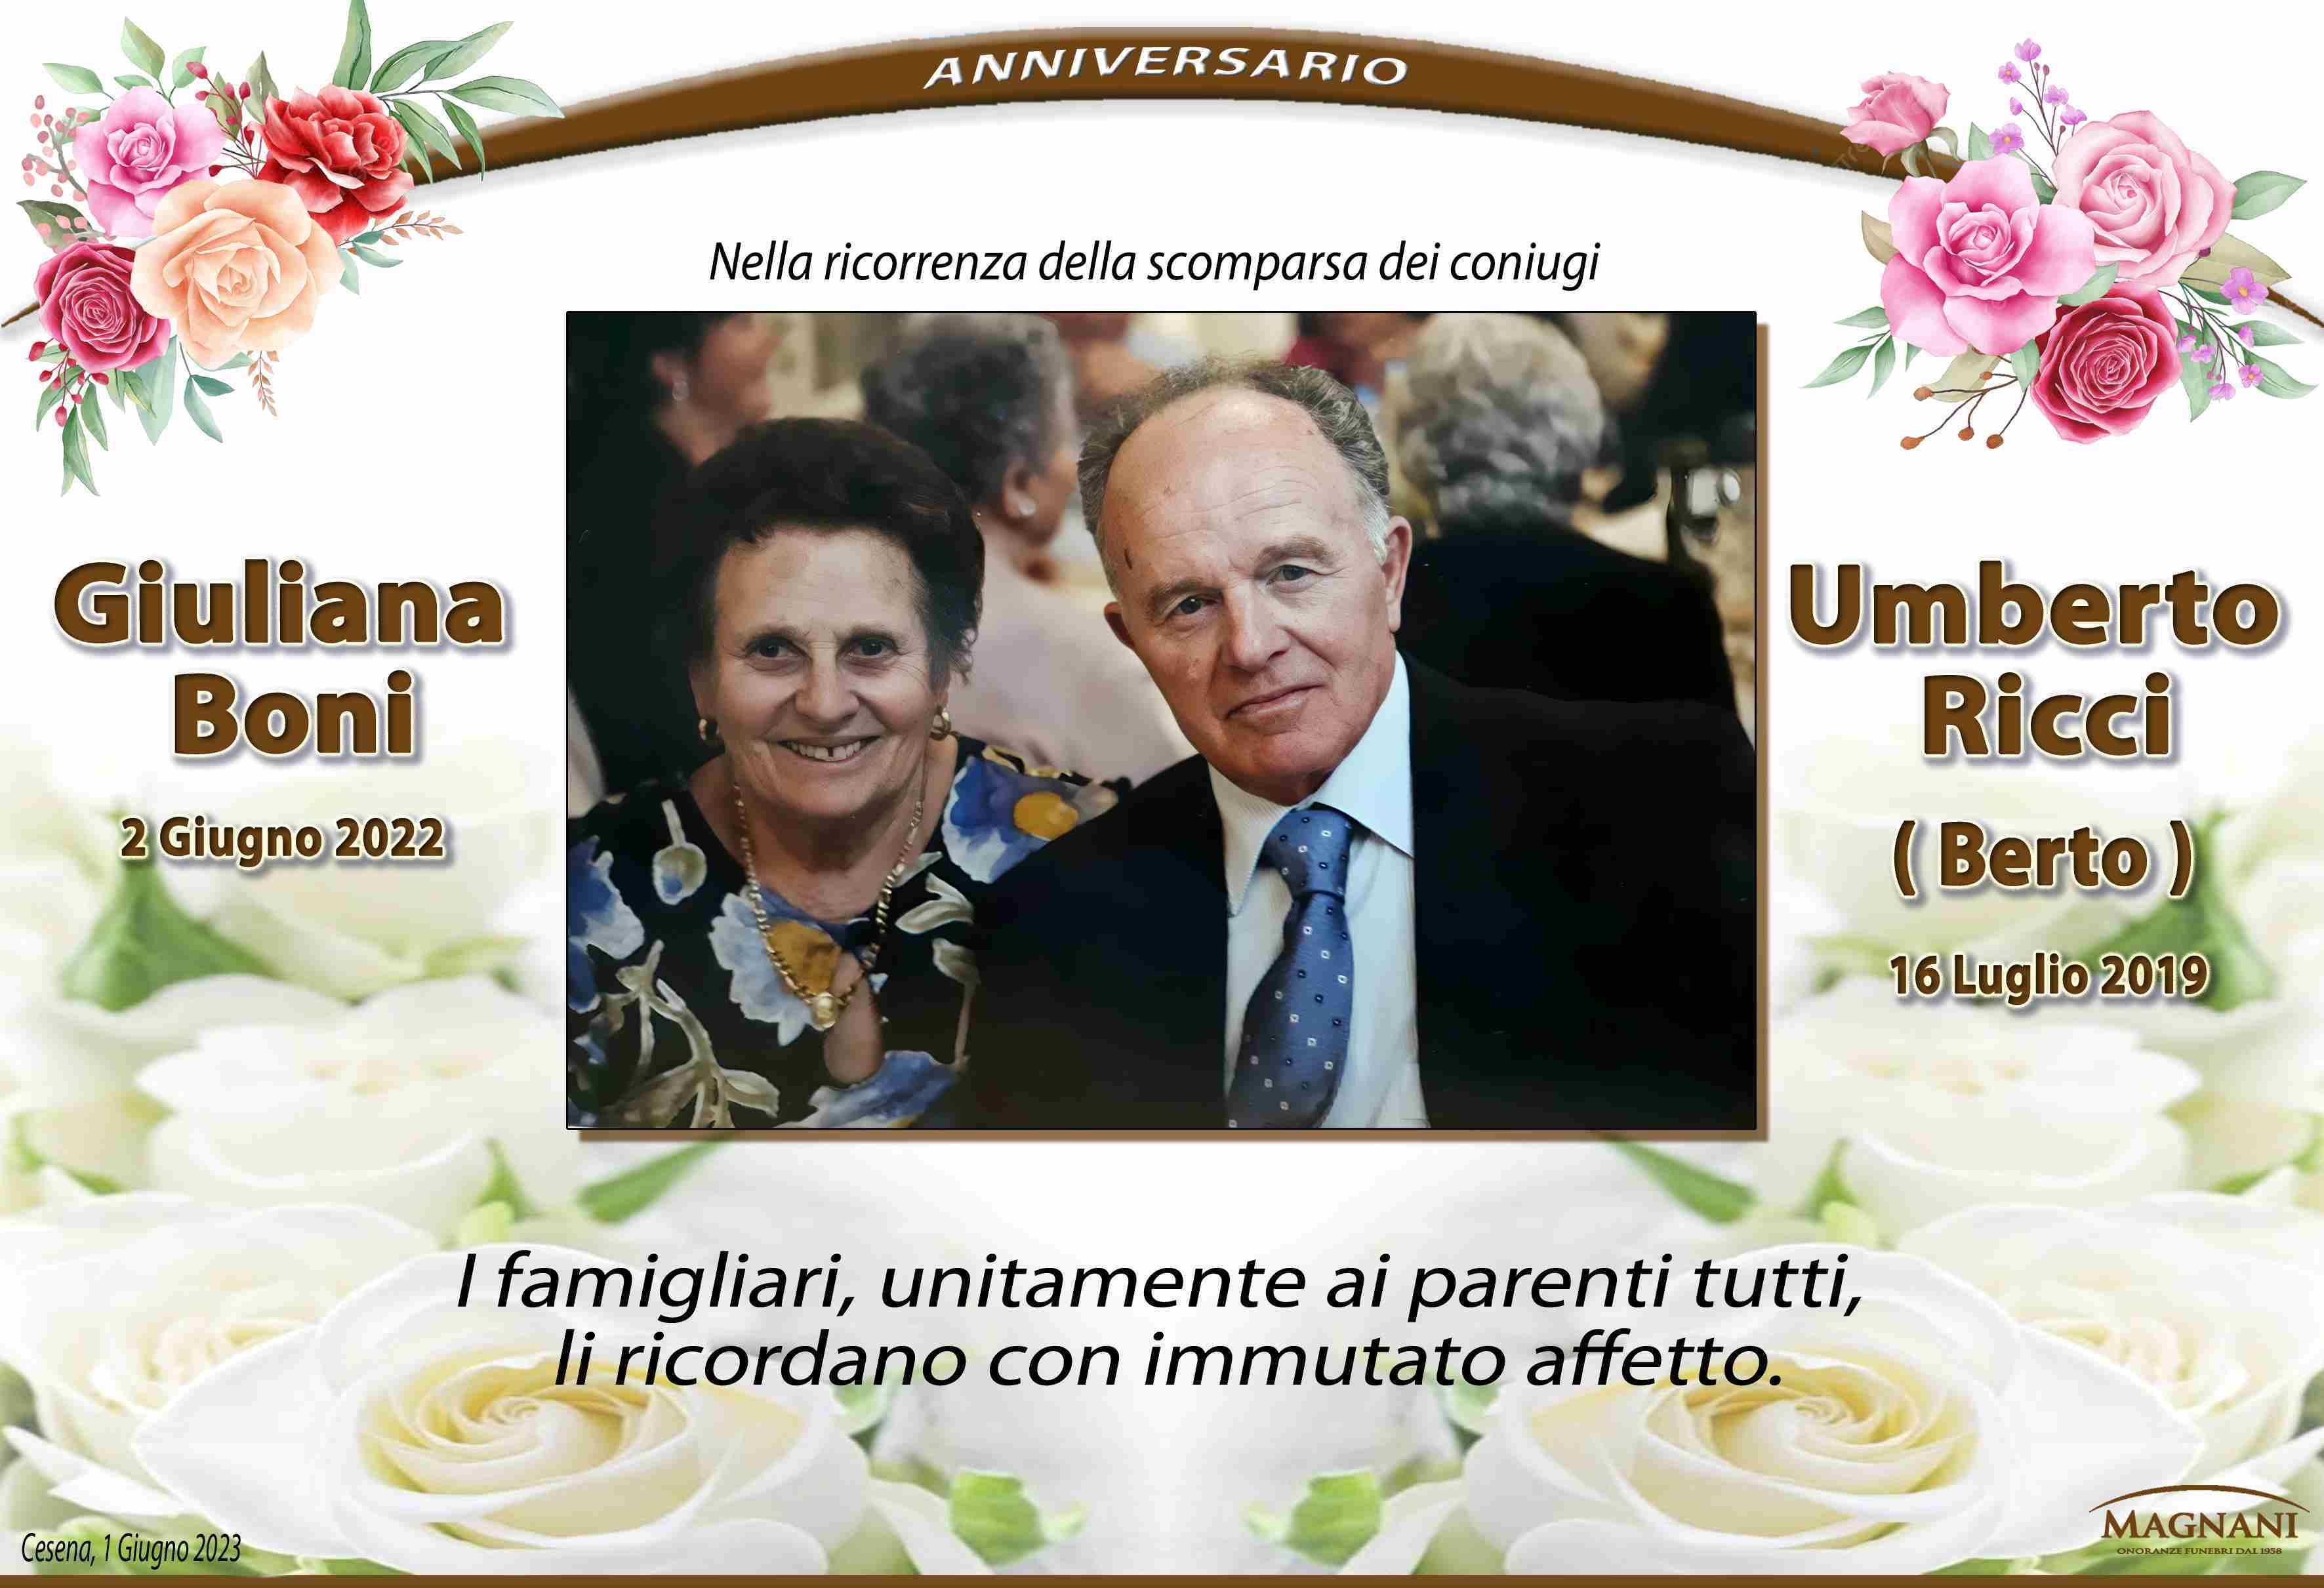 Giuliana Boni e Umberto Ricci